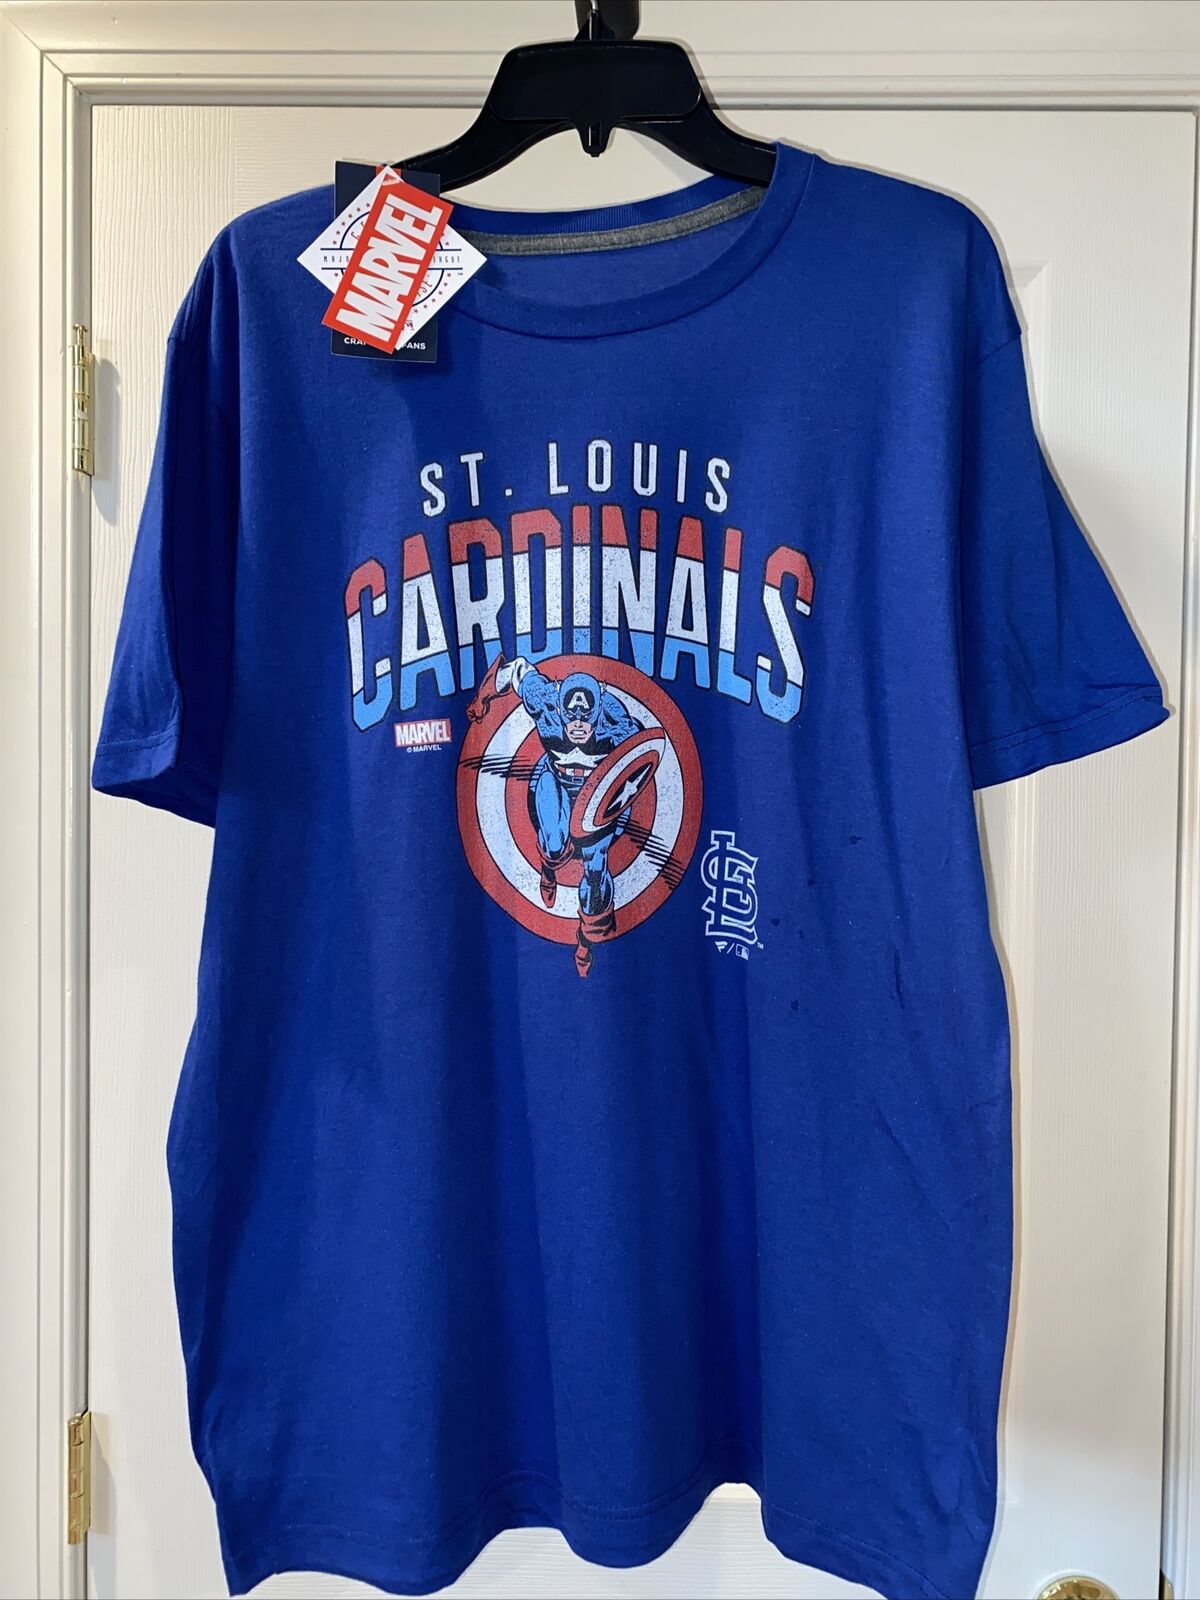 St. Louis Cardinals Apparel - Cardinals Shop, Merchandise, Gear -  Fanatics.com